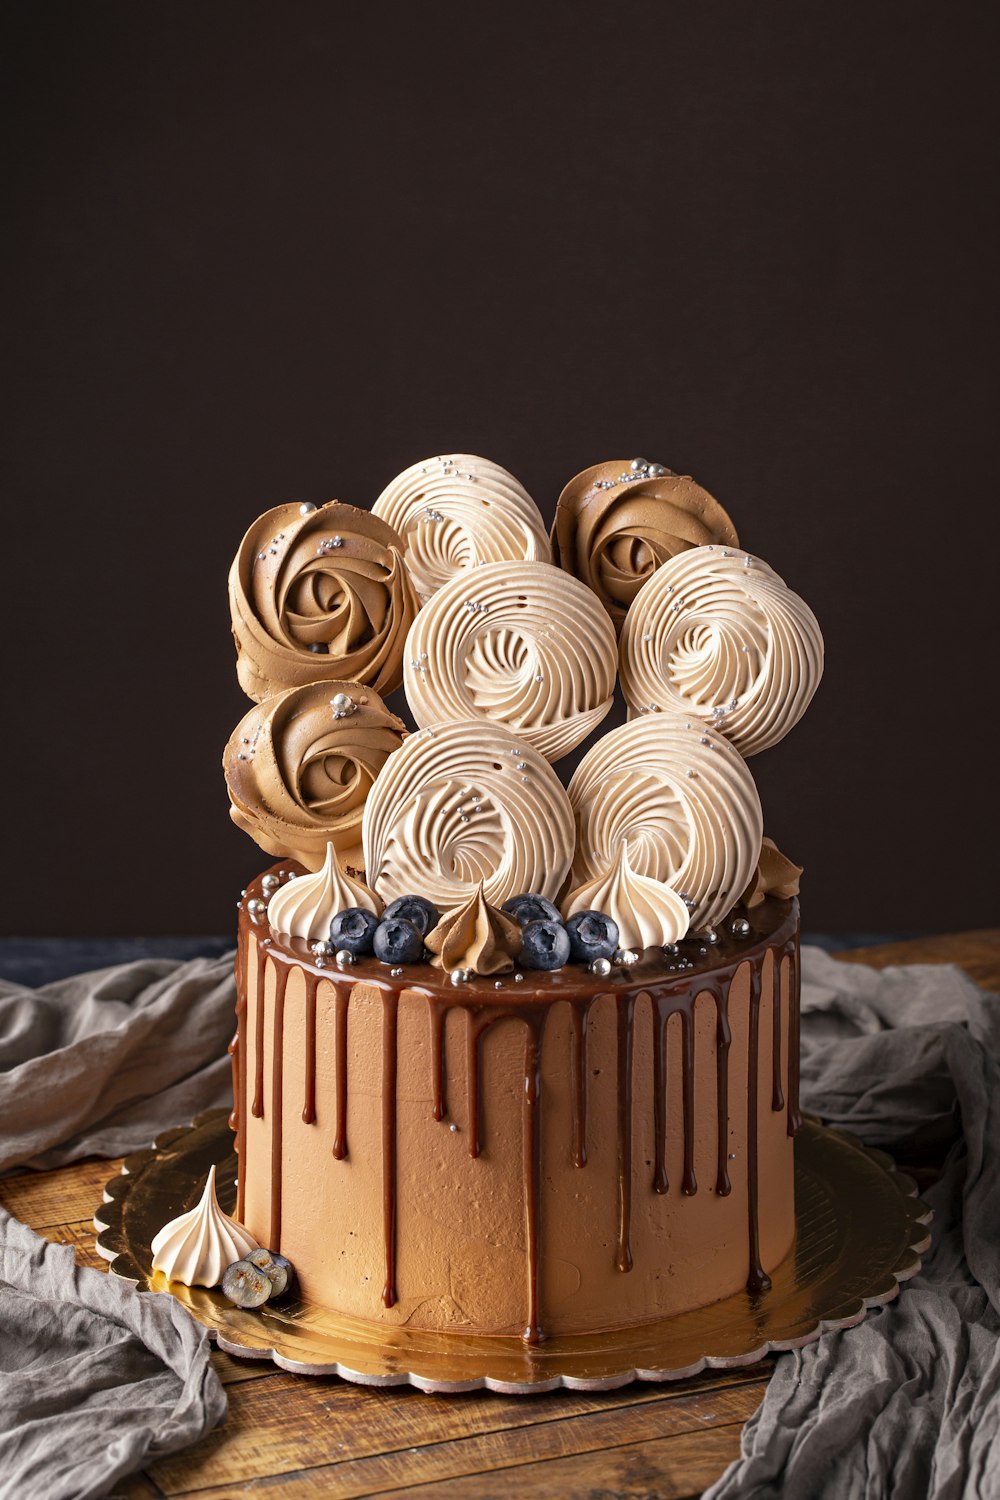 a chocolate cake with chocolate icing and chocolate swirls